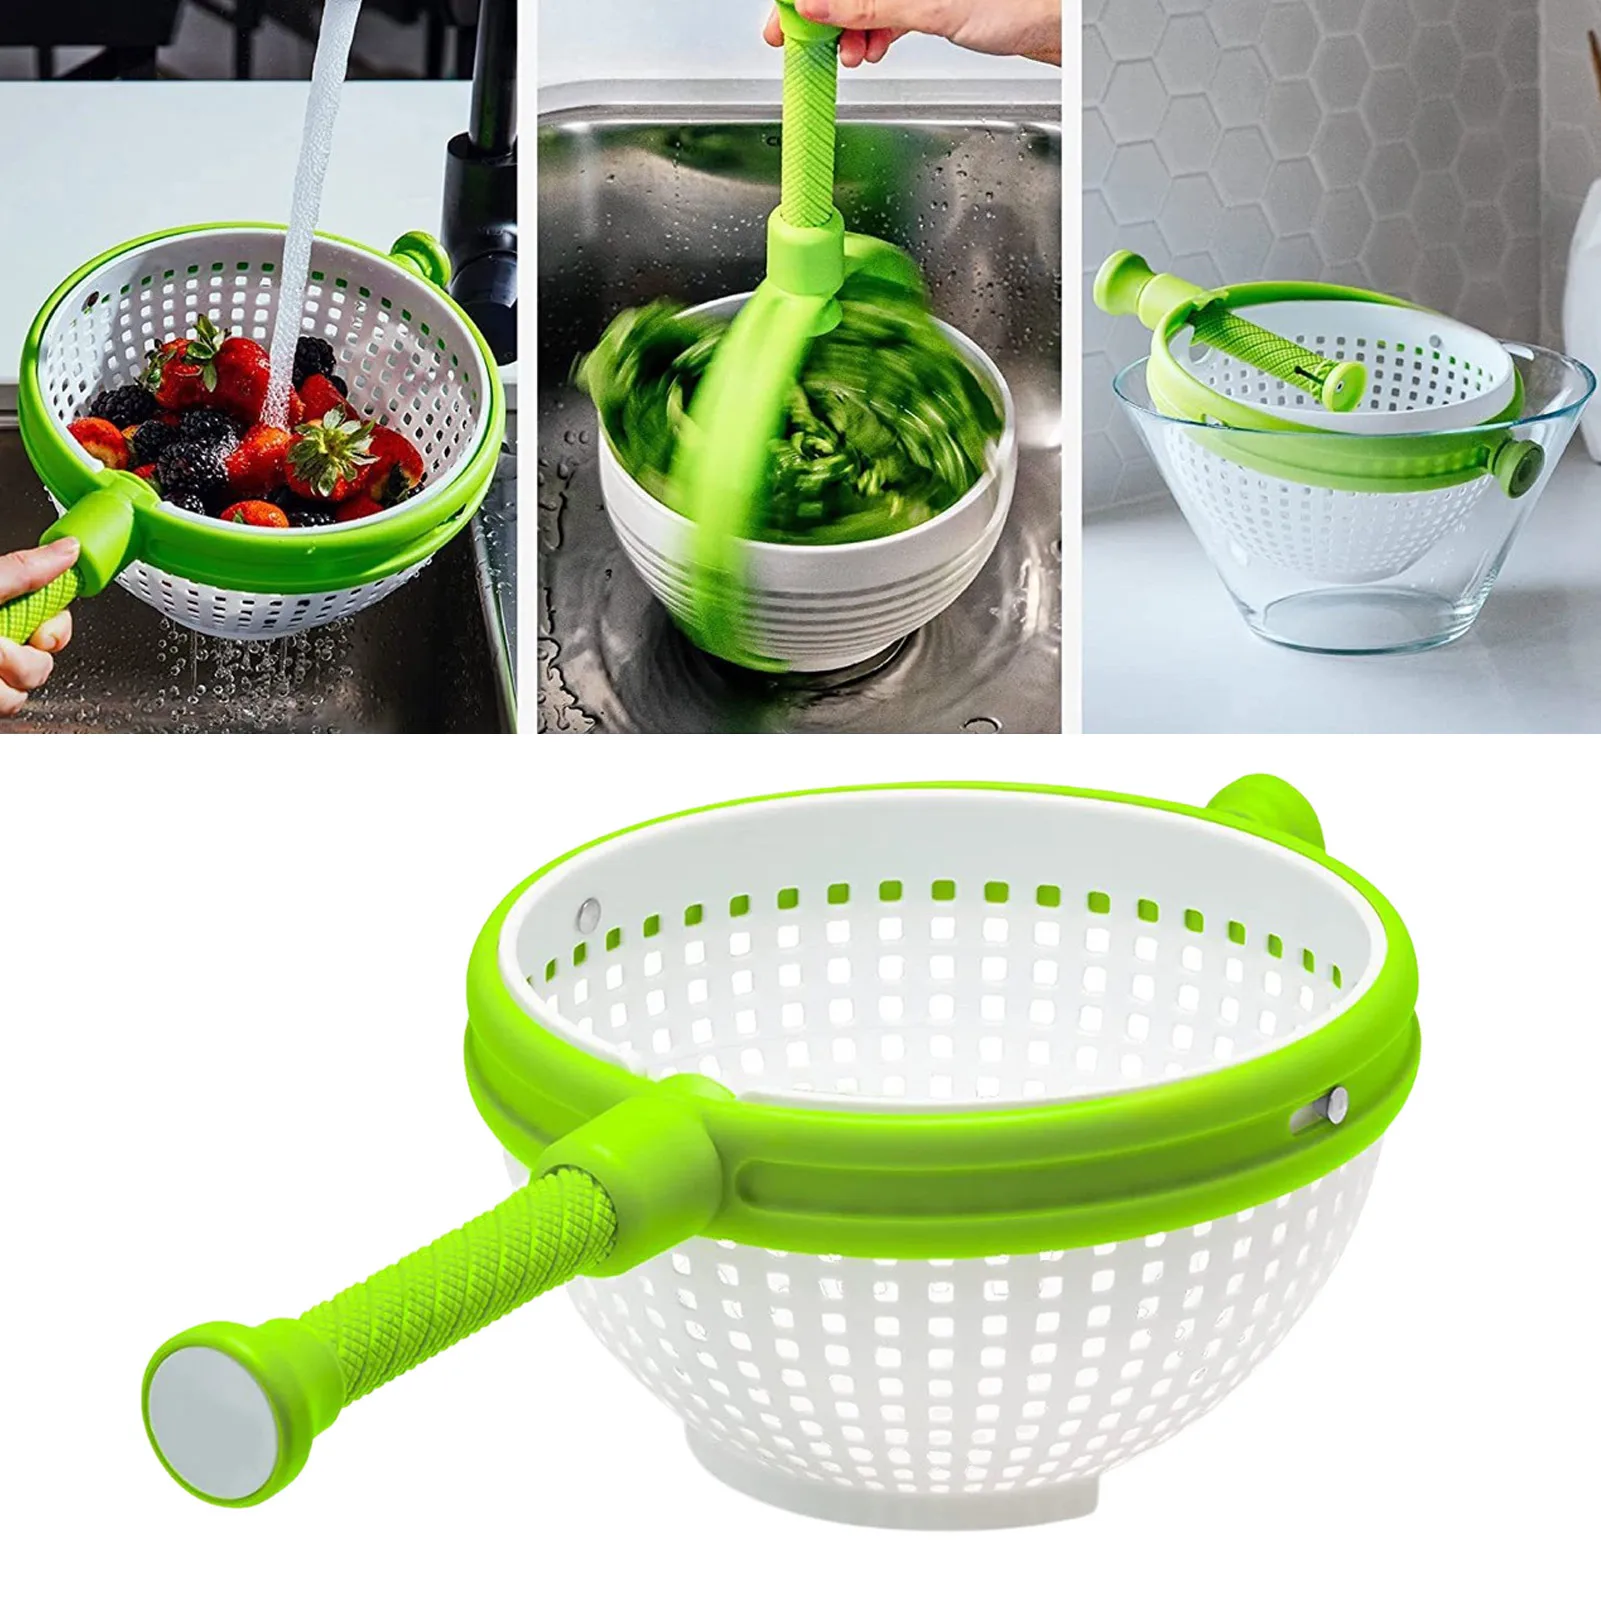 New Salad Spinner Vegetable Fruit Drainer Non-Scratch Spinning Colander Rotate Water Drainer Basket Kitchen Strainer Tools